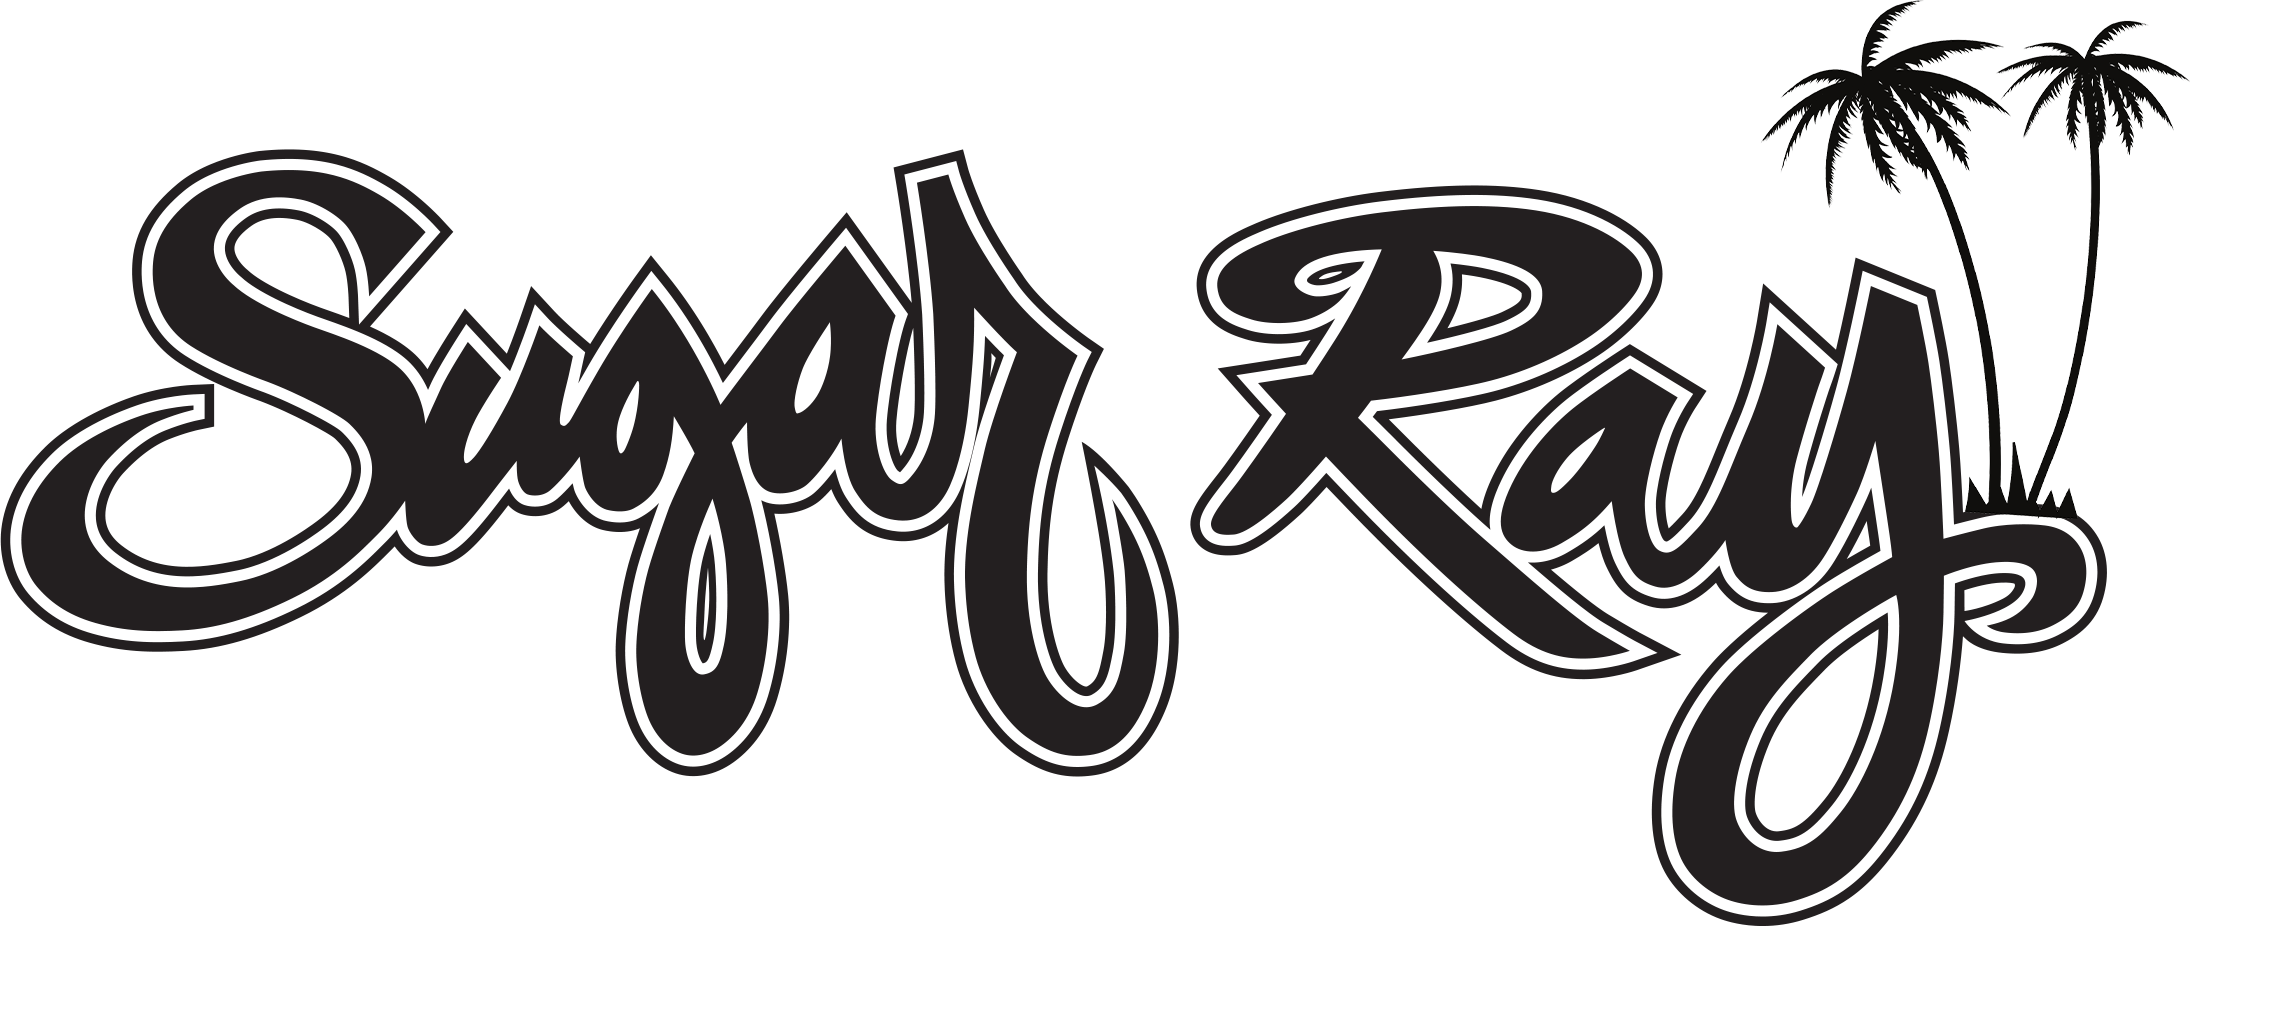 Sugar Ray Logo